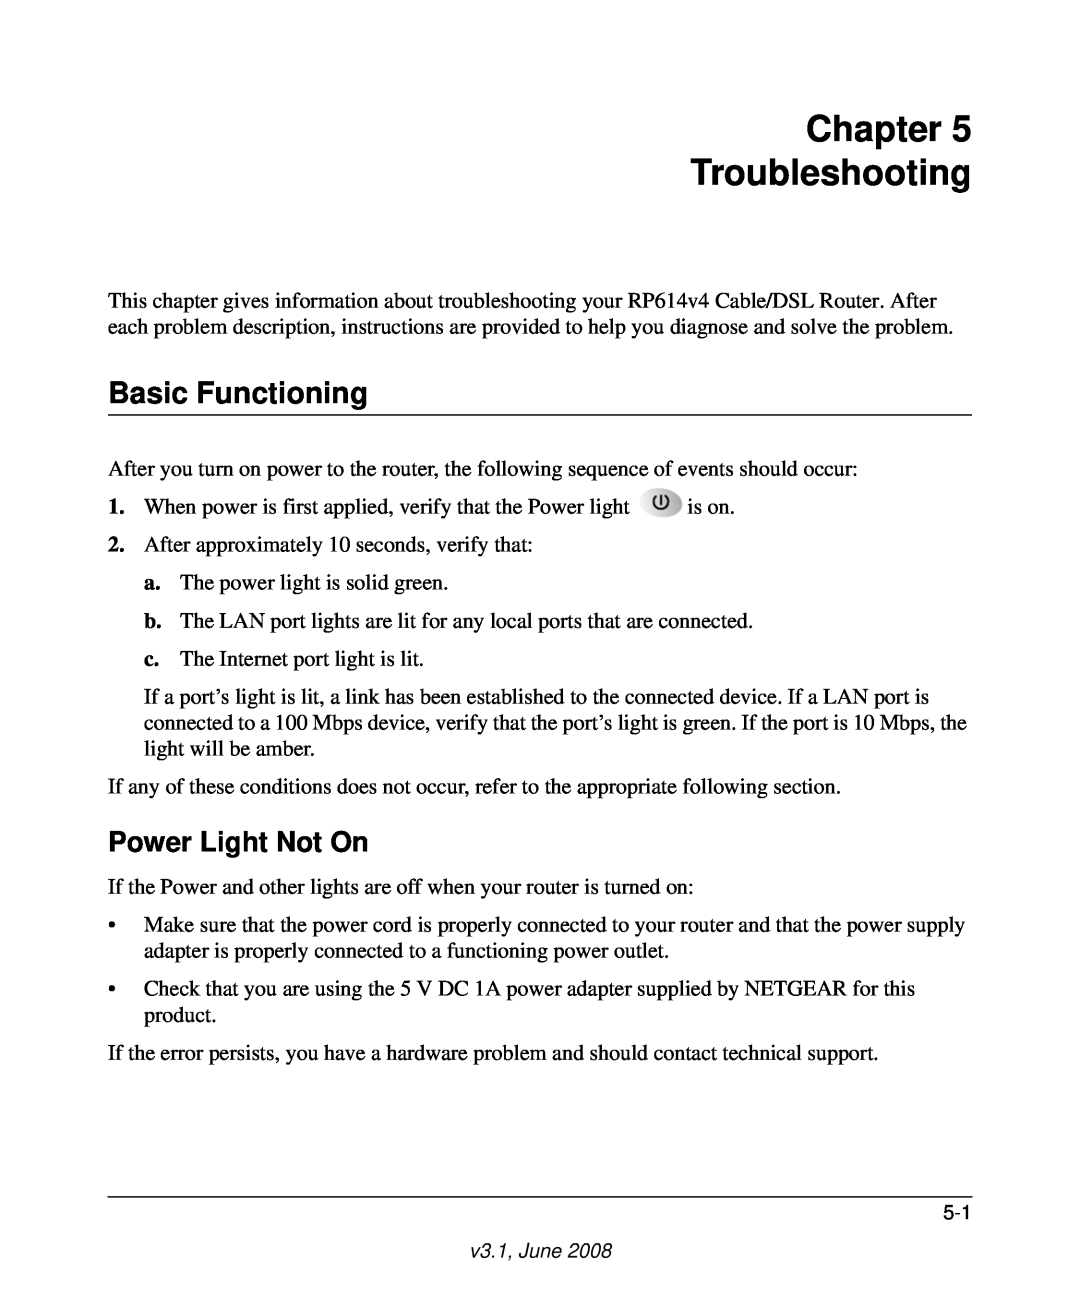 NETGEAR RP614 v4 manual Chapter Troubleshooting, Basic Functioning, Power Light Not On 